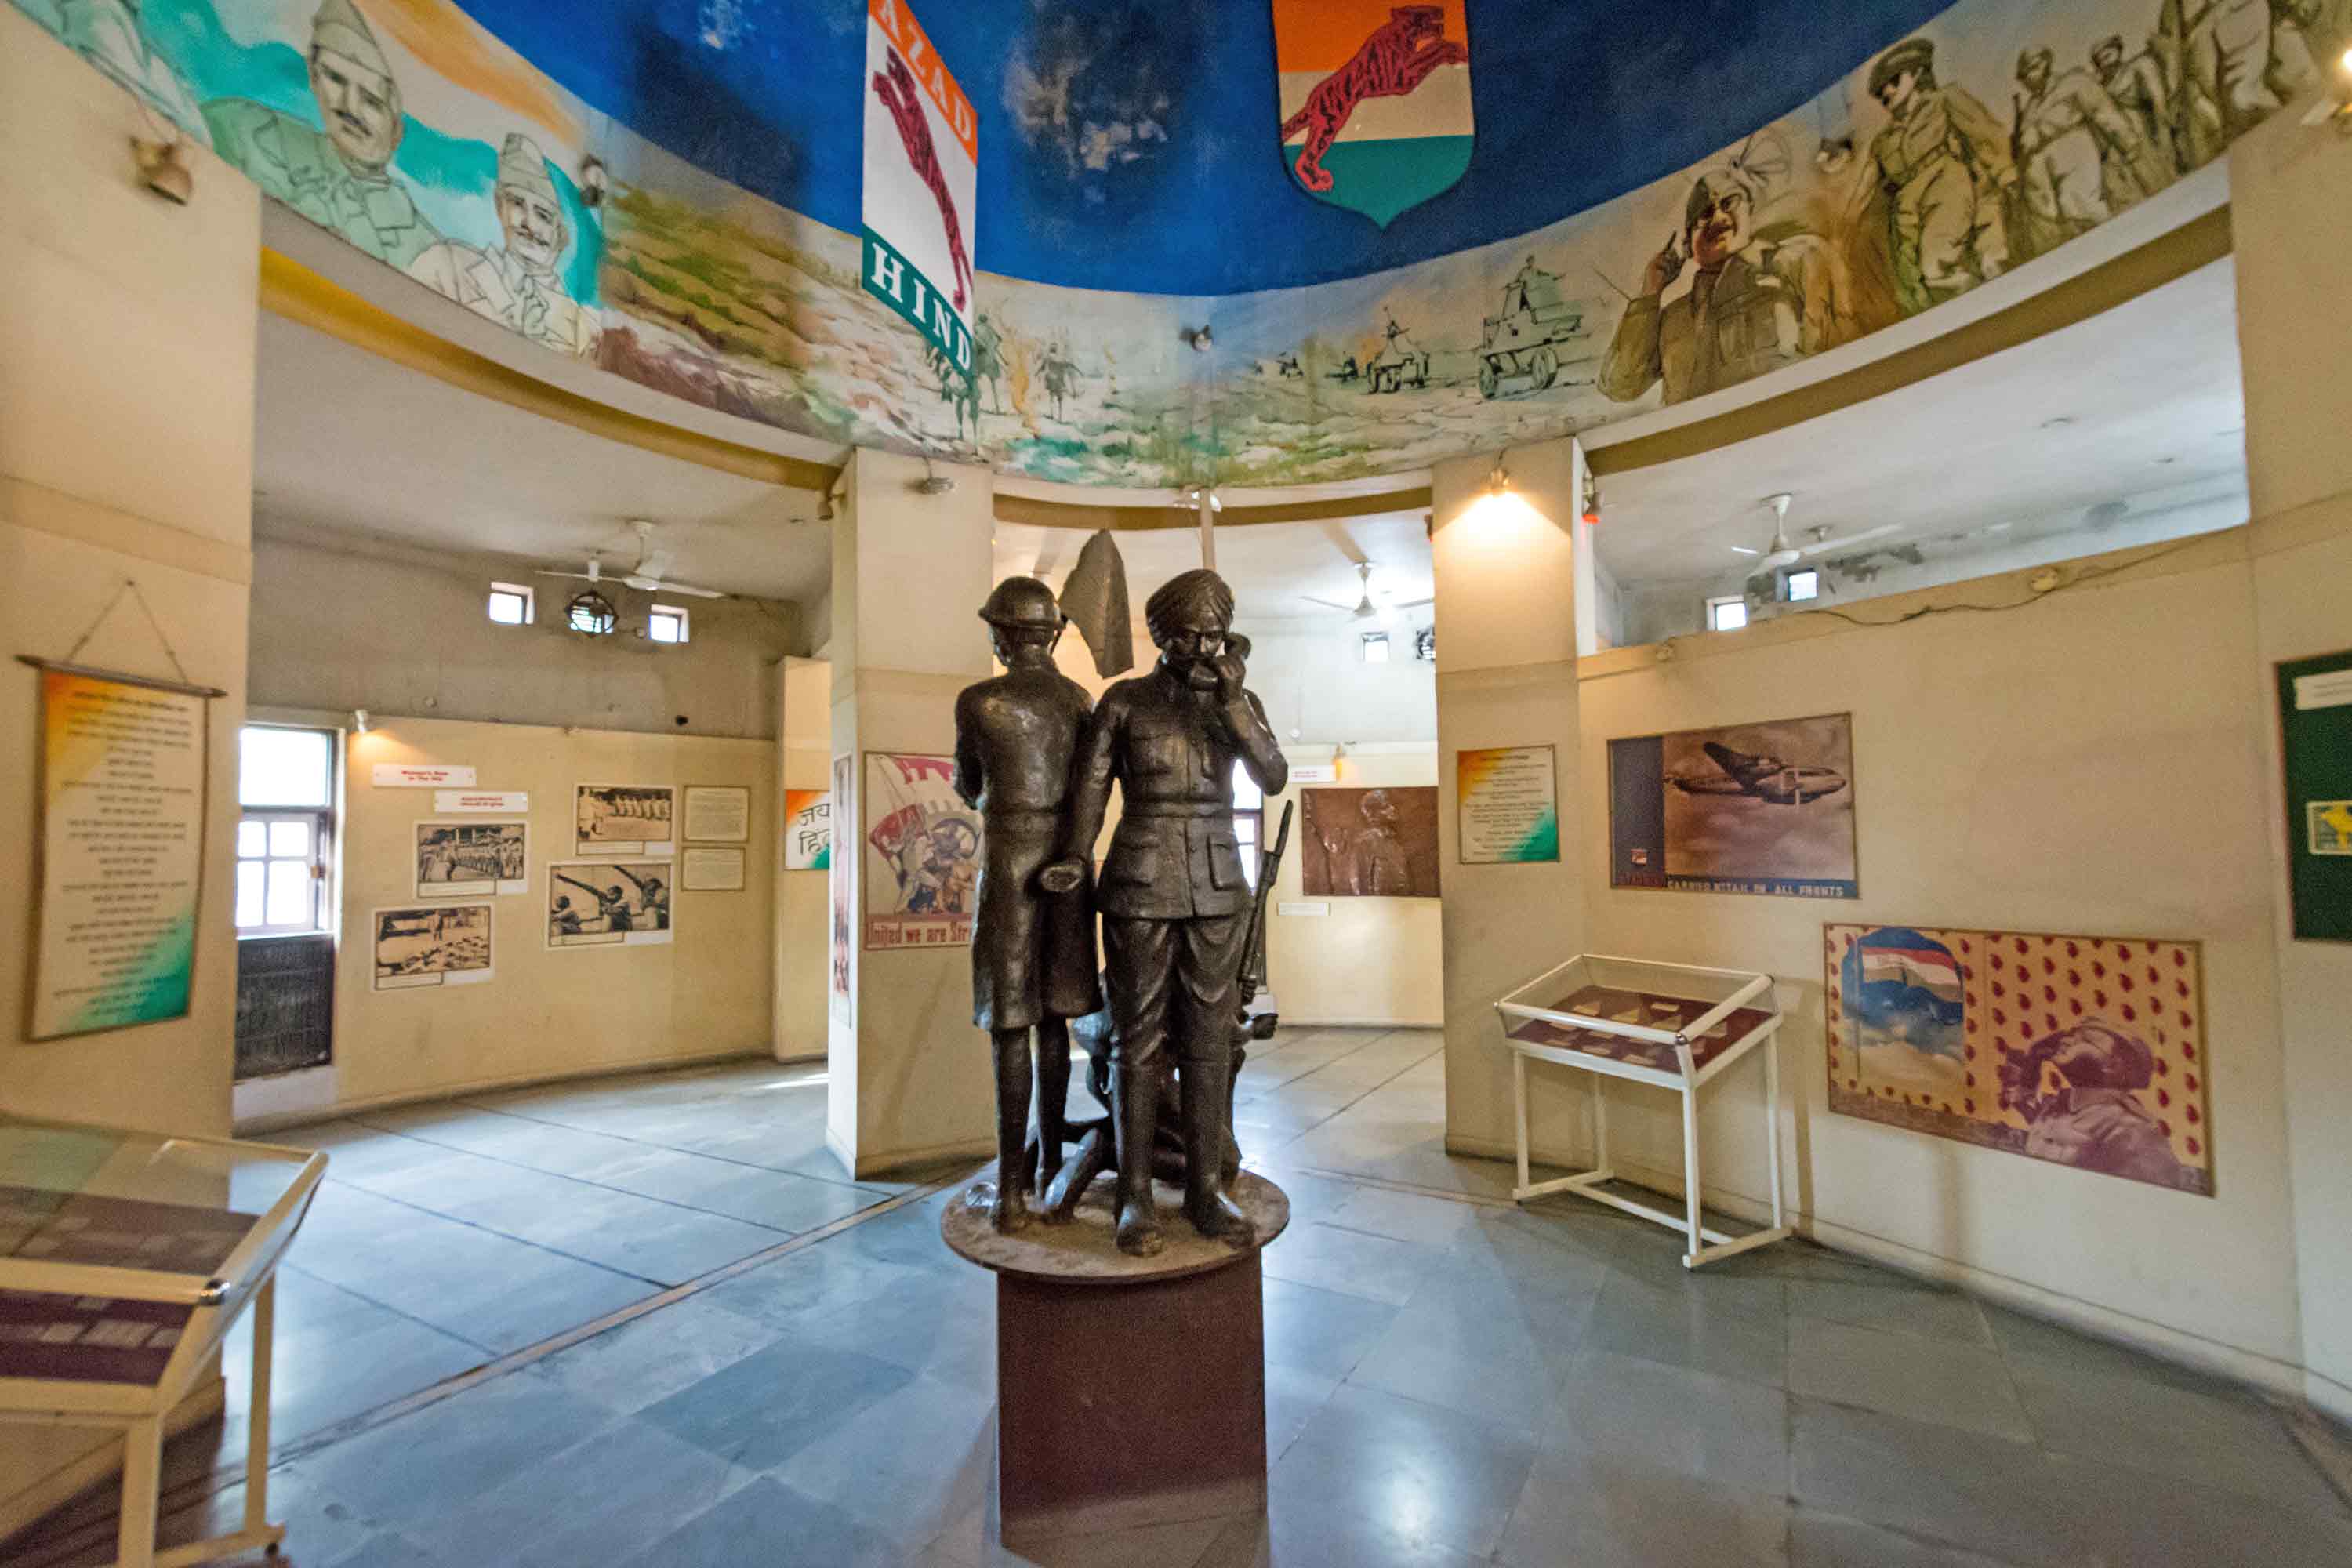 Interiors of the museum